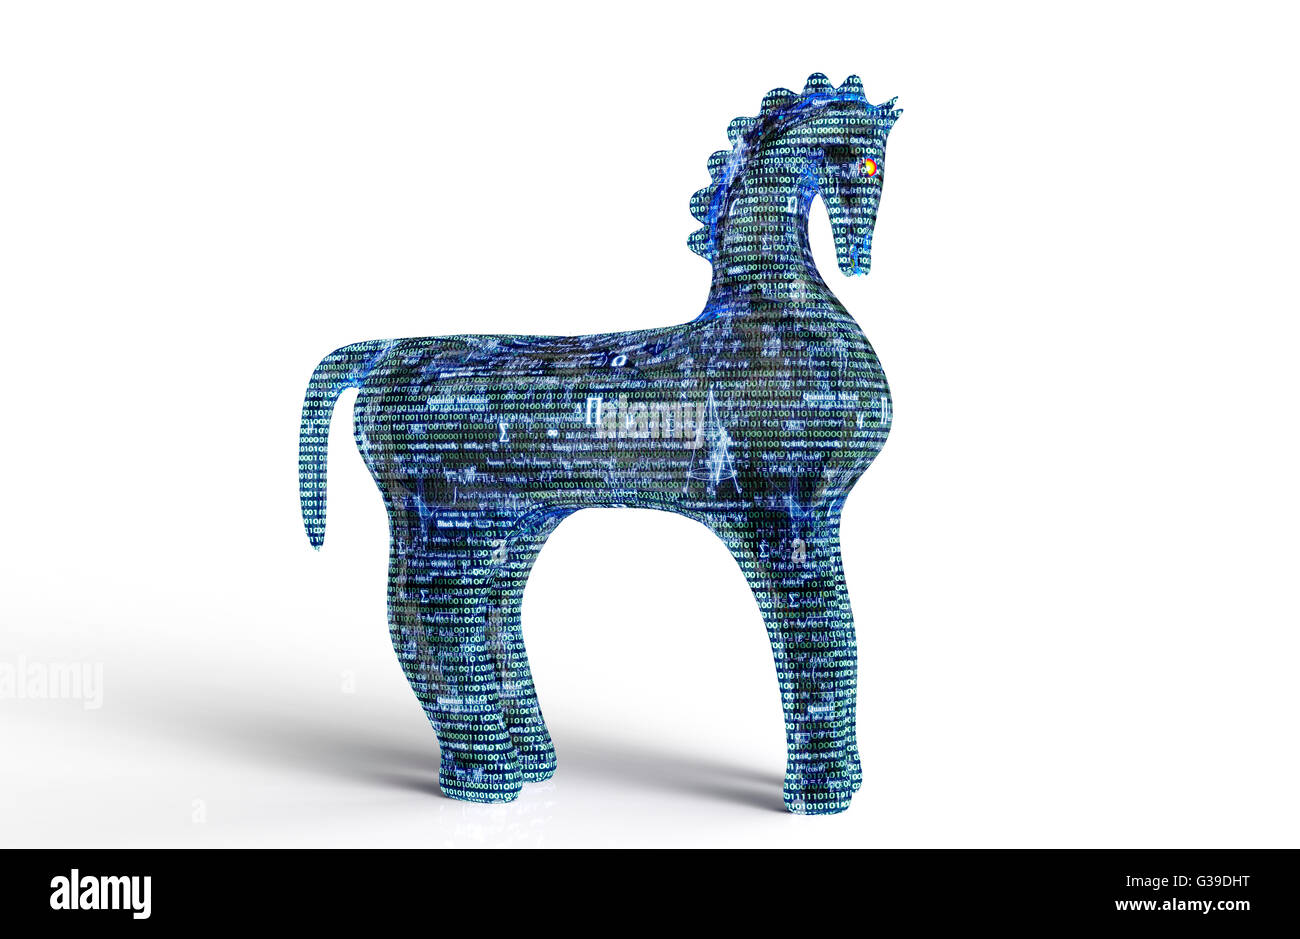 11 photo/game apps hide Trojan horse virus #phonesecurity #internet